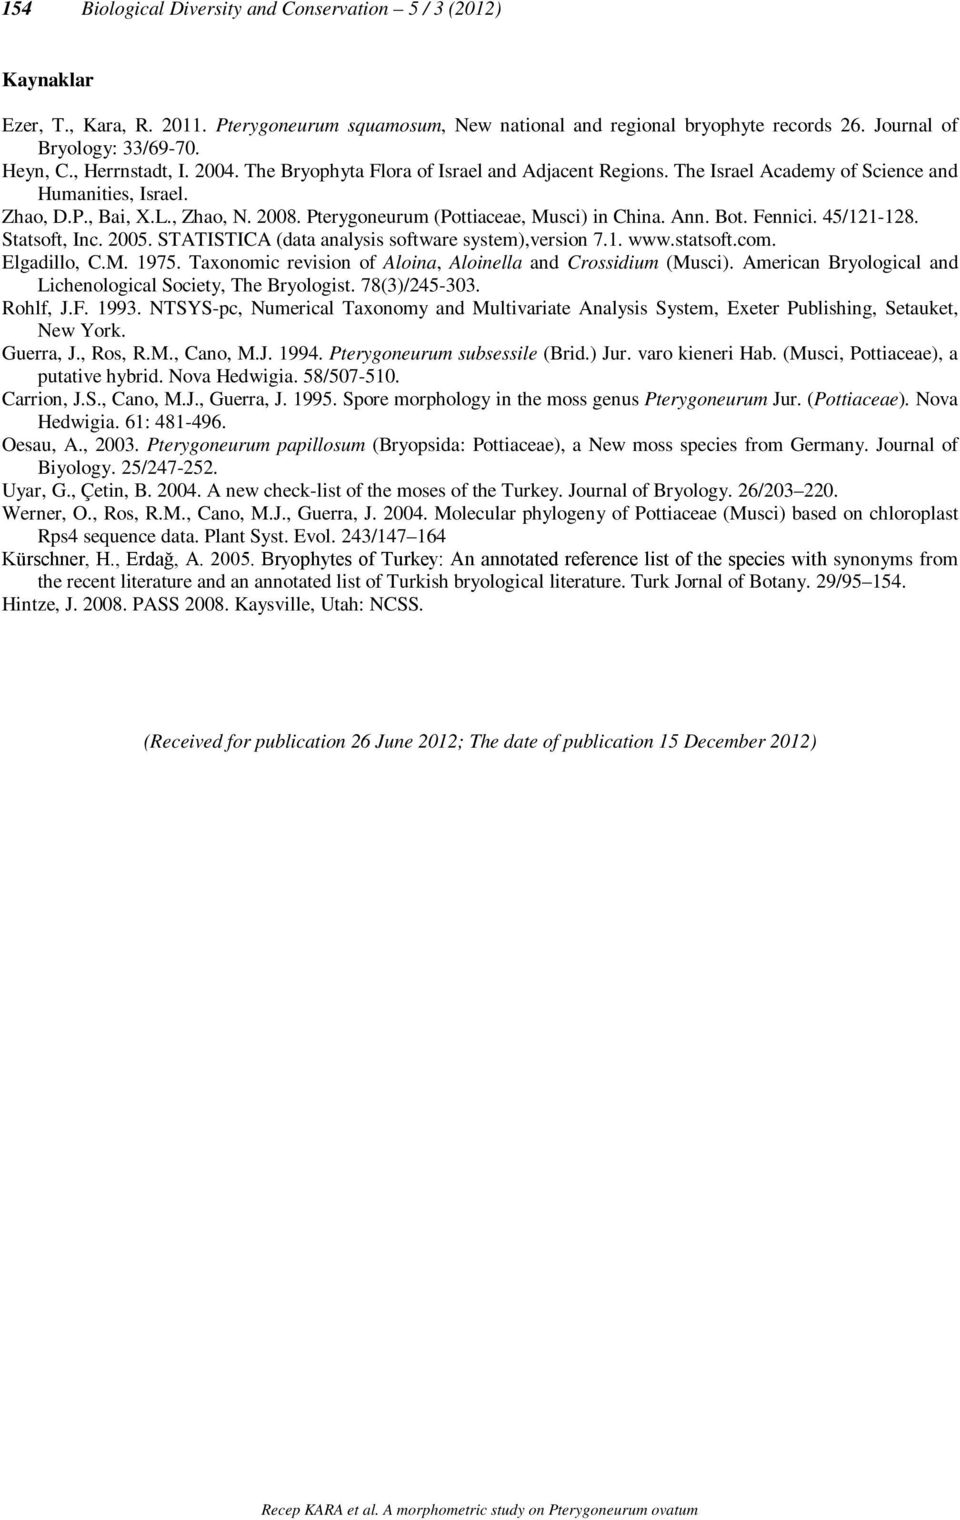 Pterygoneurum (Pottiaceae, Musci) in China. Ann. Bot. Fennici. 45/121-128. Statsoft, Inc. 2005. STATISTICA (data analysis software system),version 7.1. www.statsoft.com. Elgadillo, C.M. 1975.